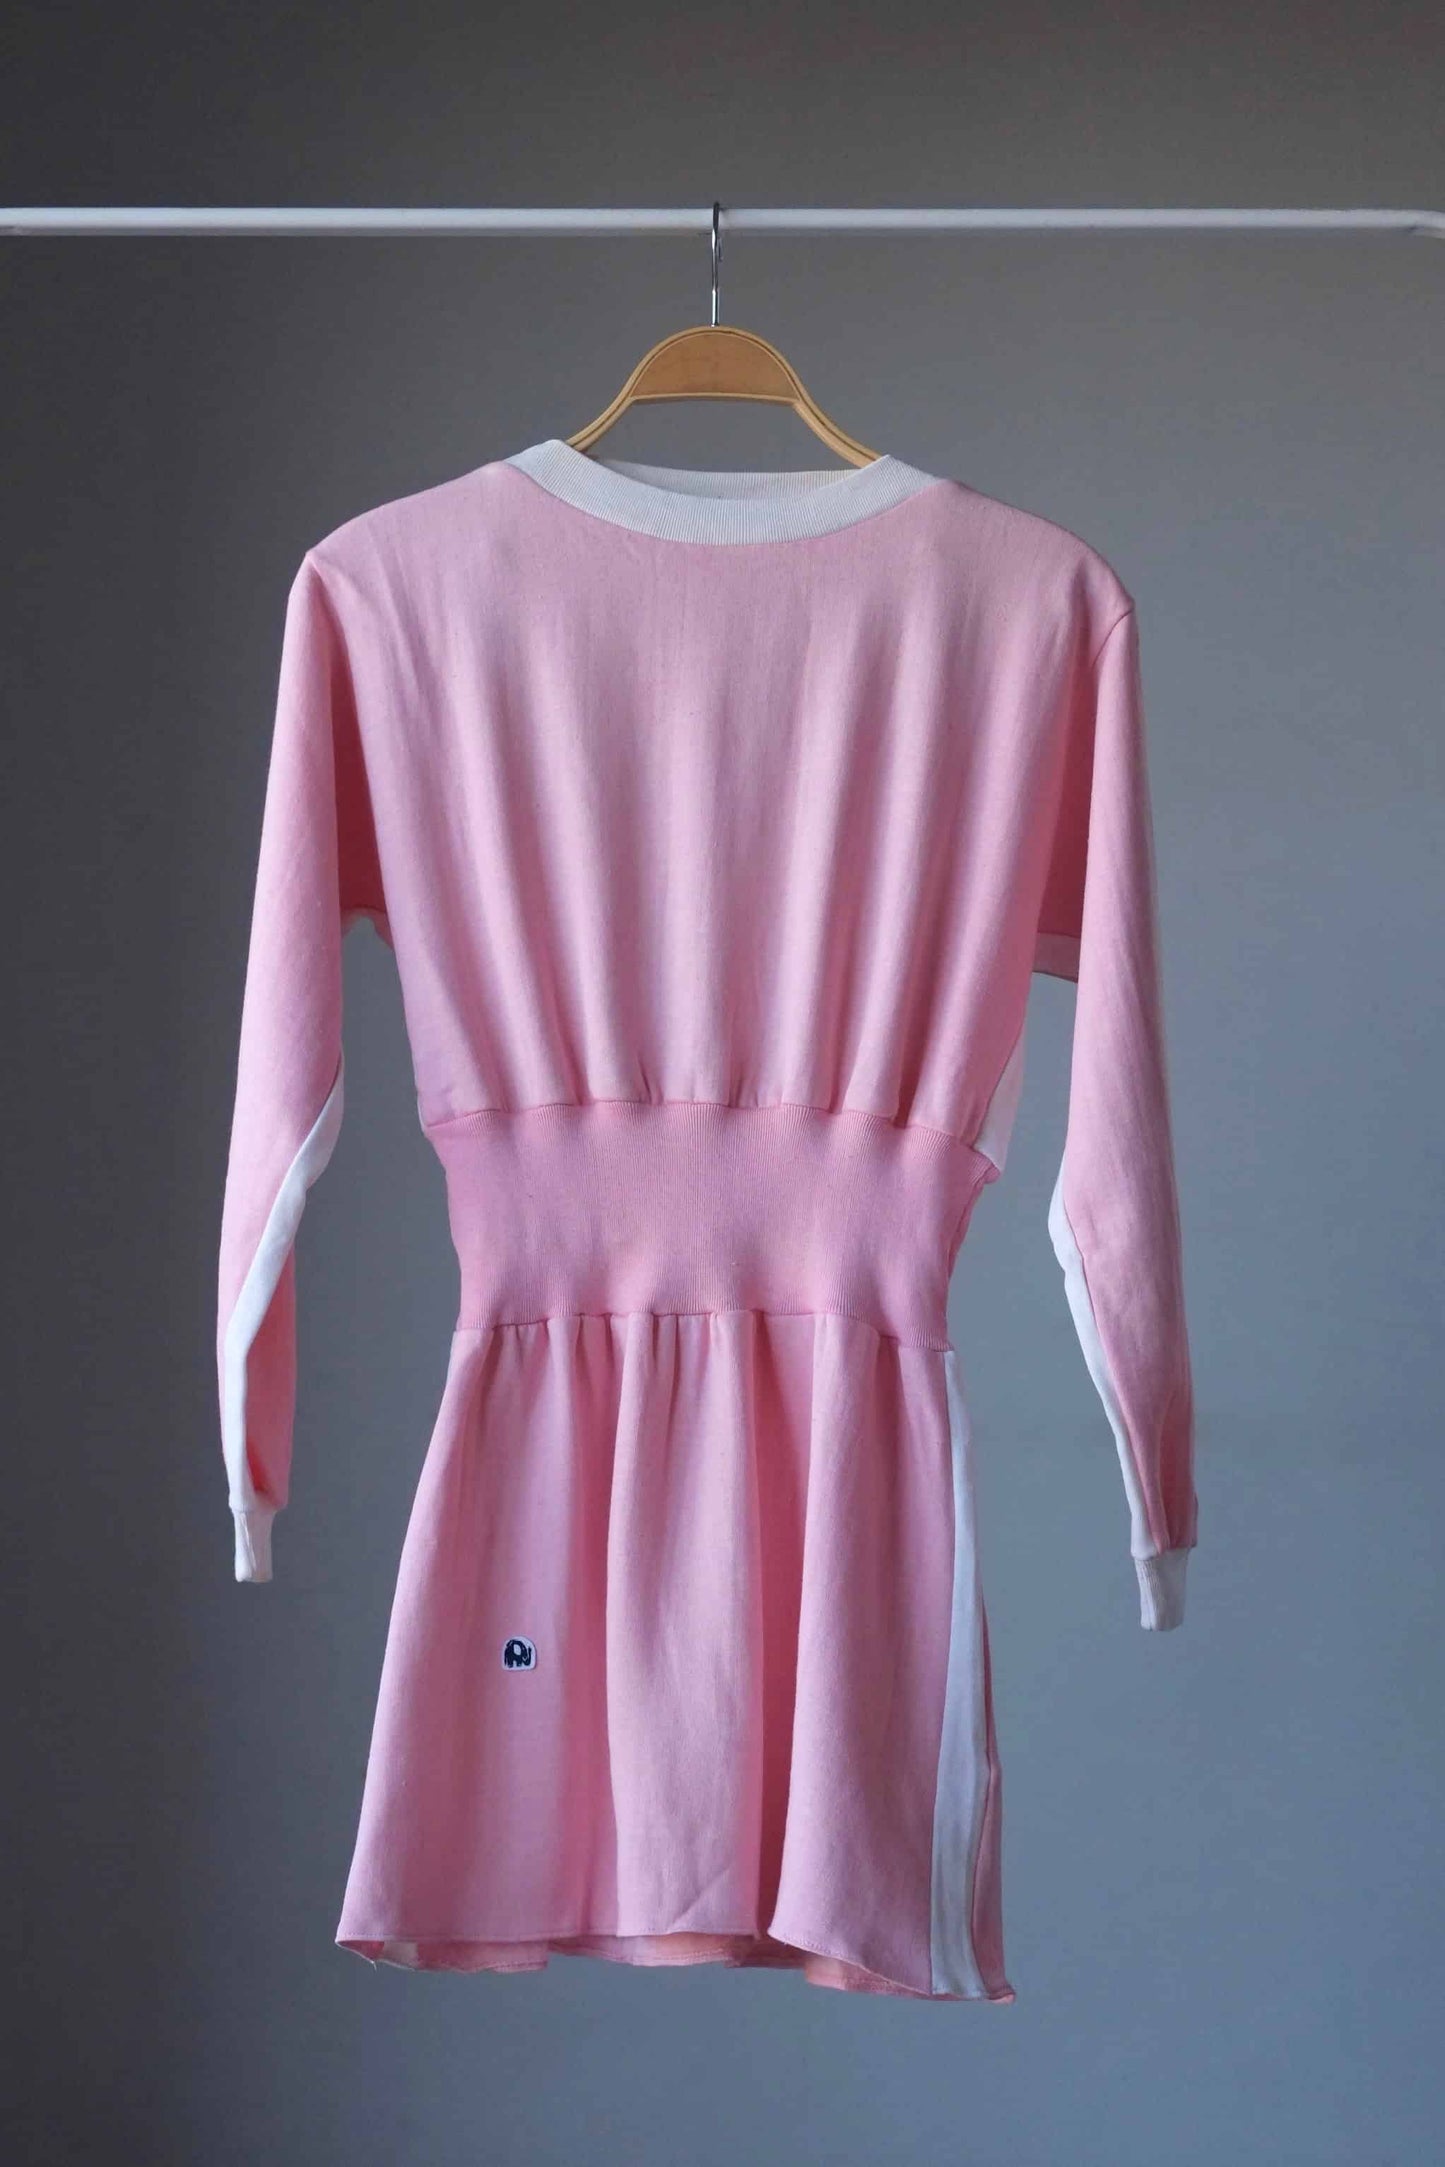  Vintage 80's Sweatshirt Dress pink